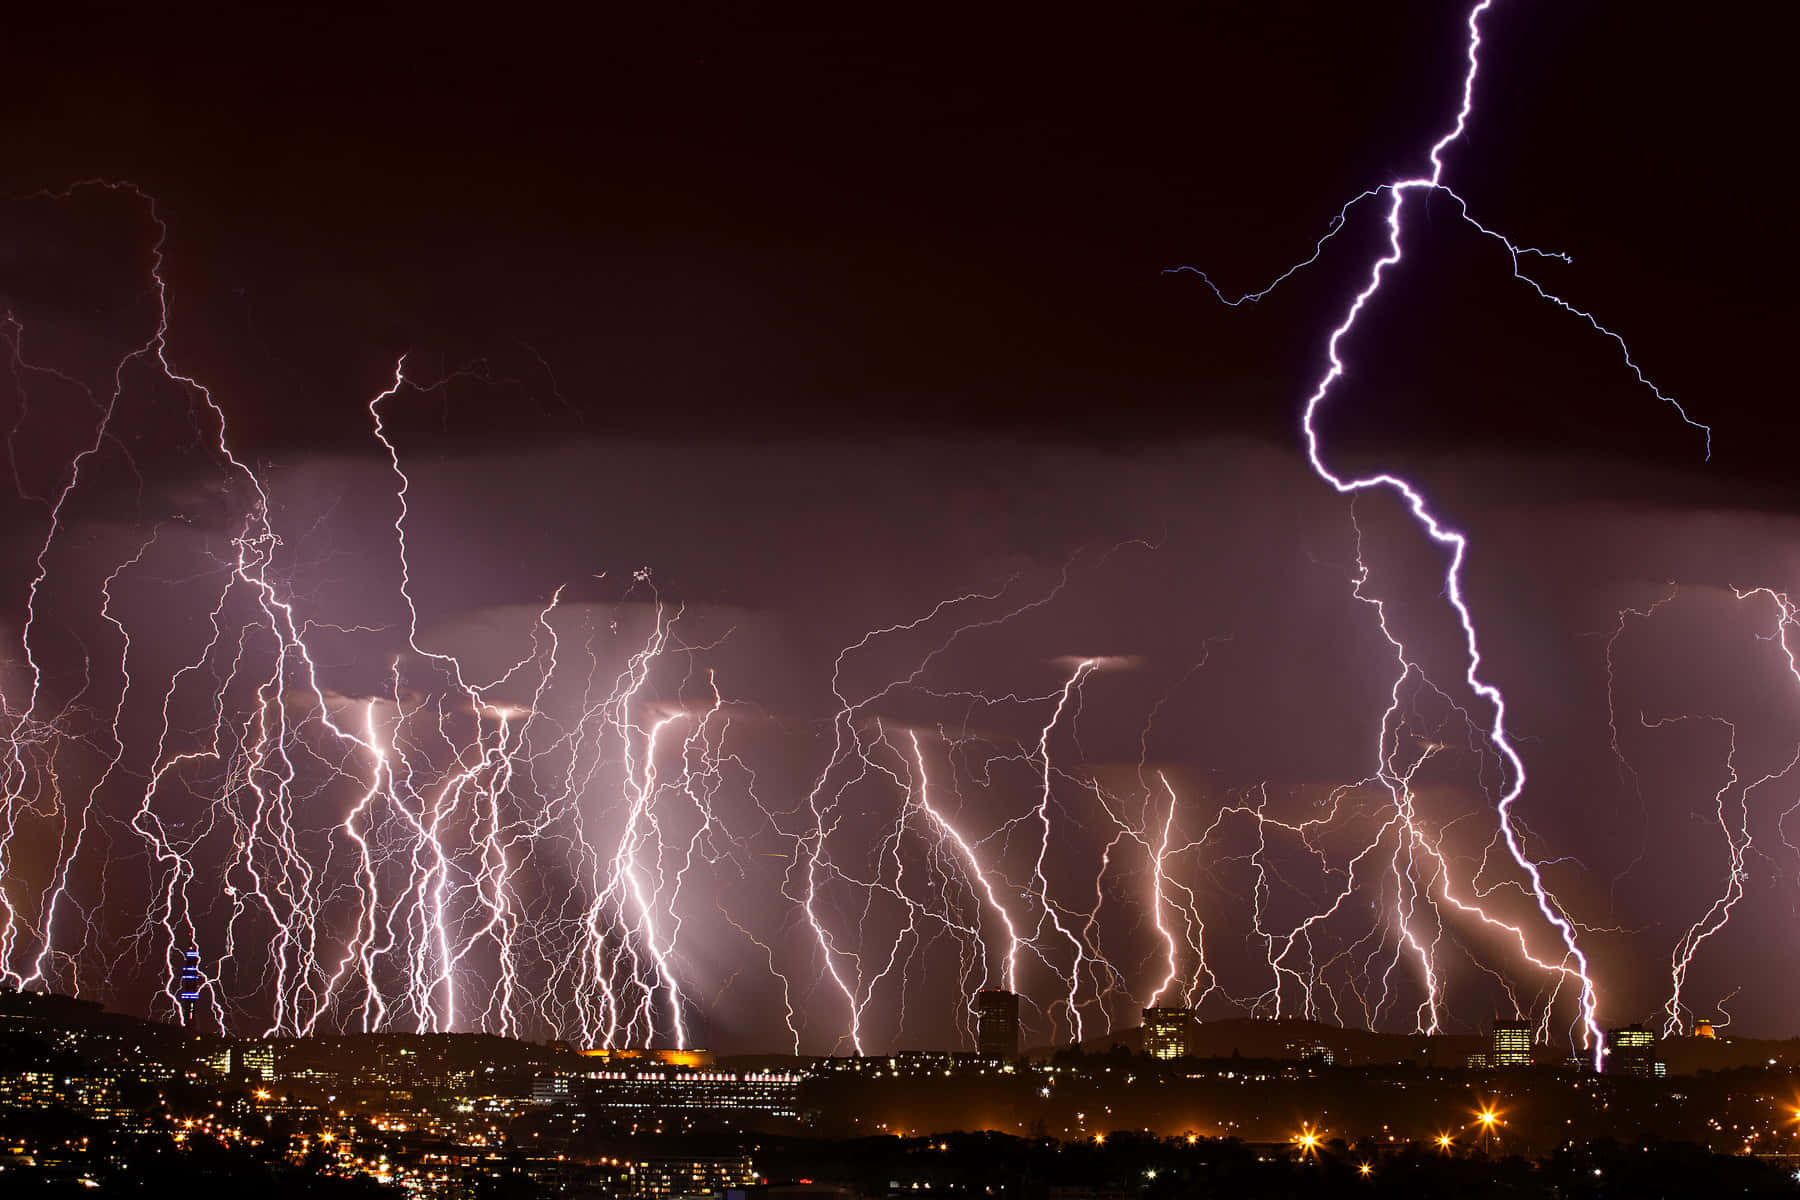 An illuminating lightning bolt shoots across a night sky.